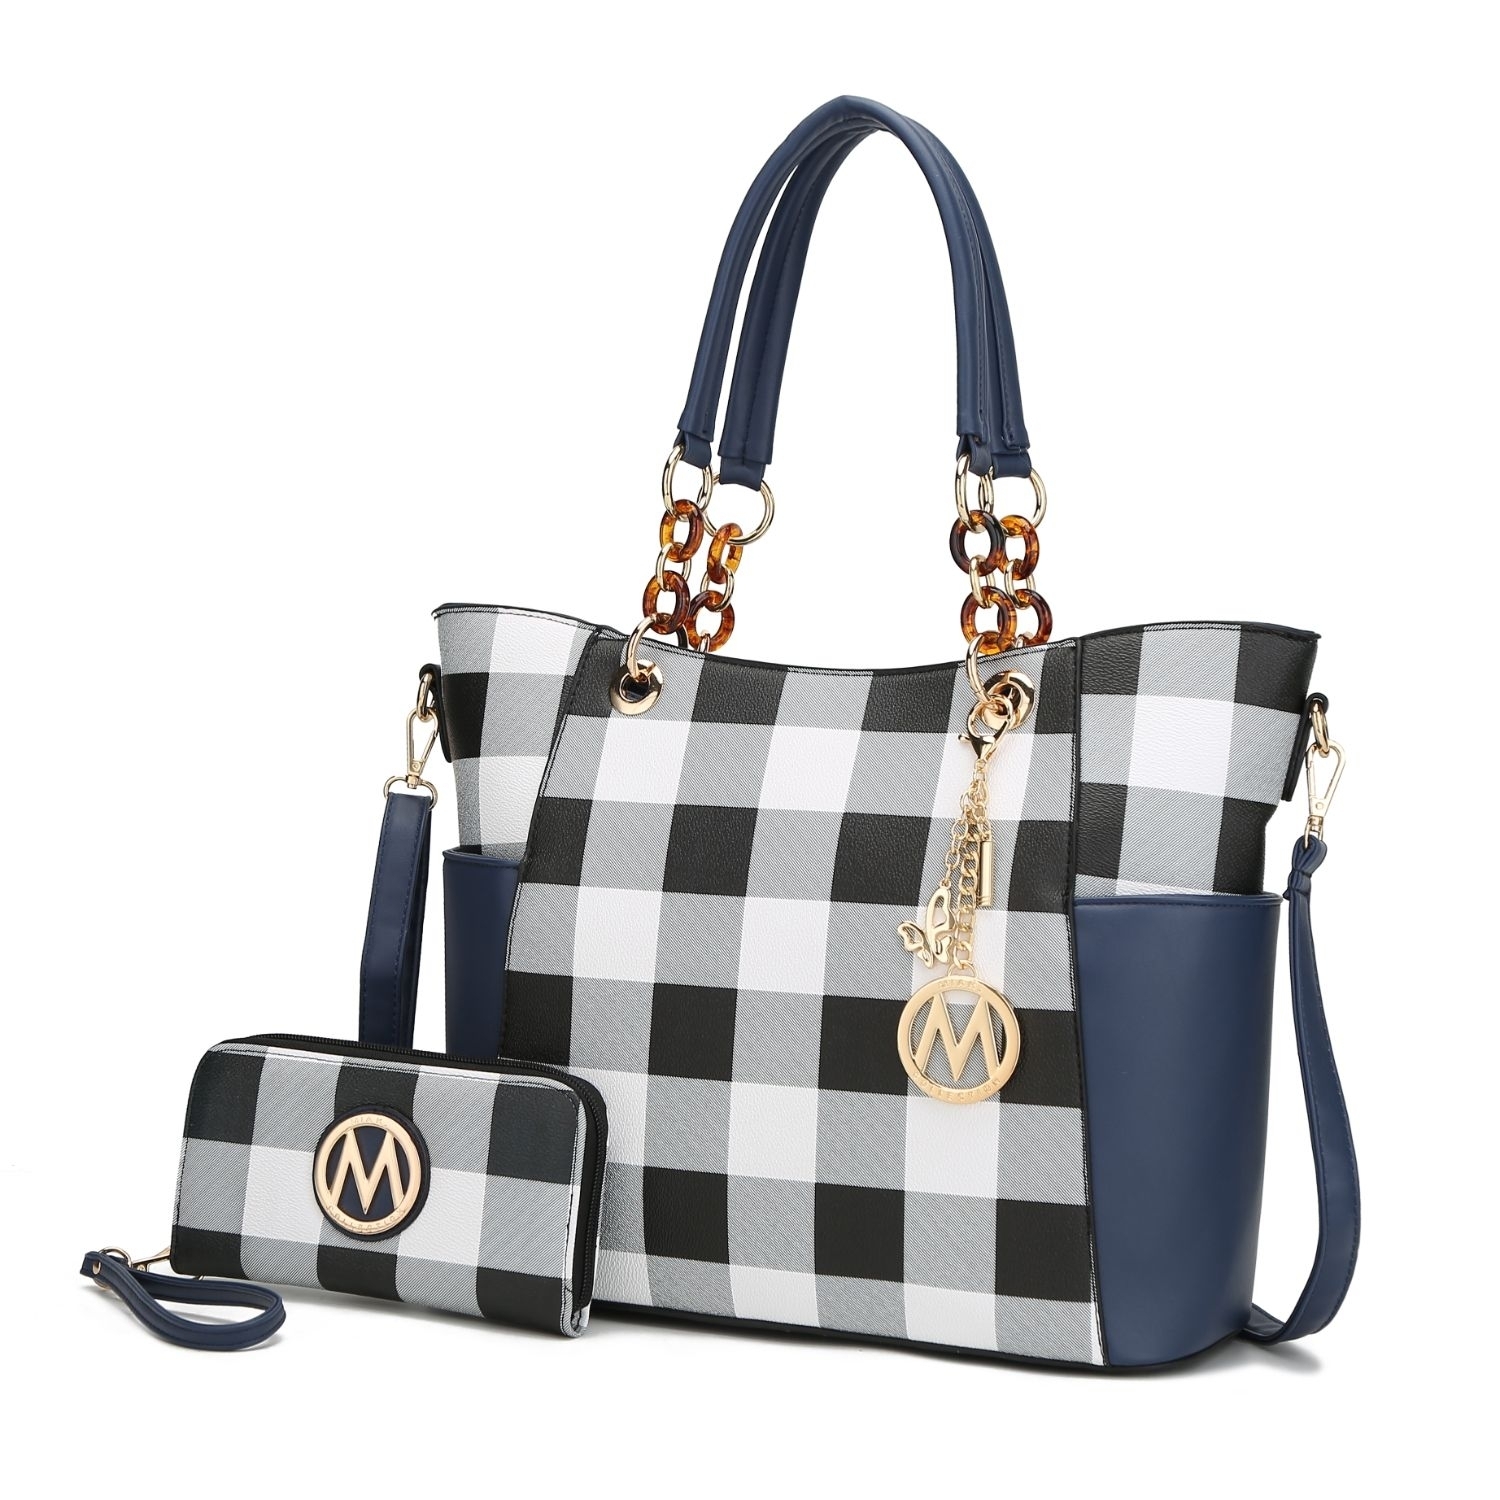 Bonita Checkered Tote 2 Pcs Wome's Large Handbag With Wallet And Decorative M Keychain By Mia K. - Navy